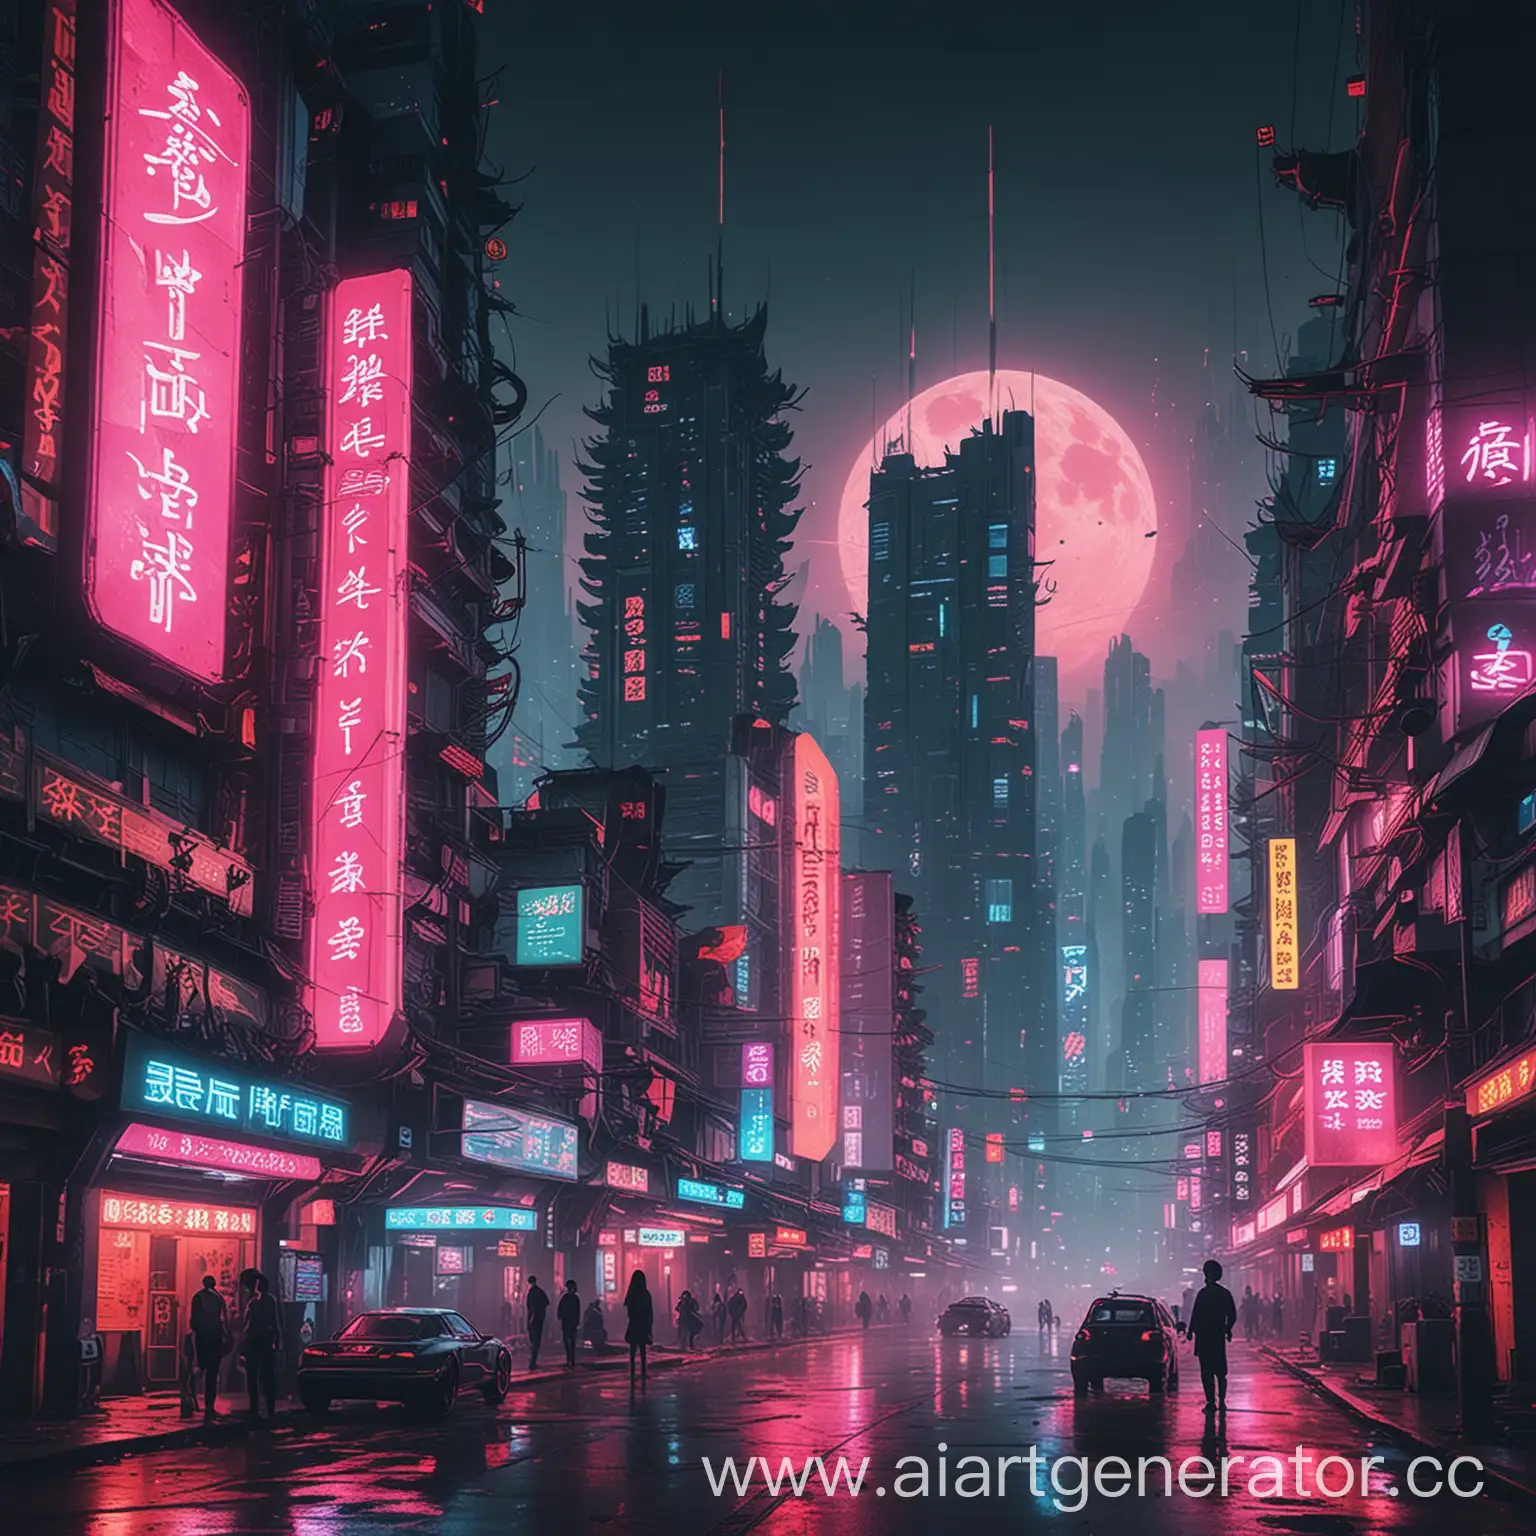 Futuristic-Asian-Cityscape-Illuminated-with-Neon-Lights-in-Cyberpunk-Style